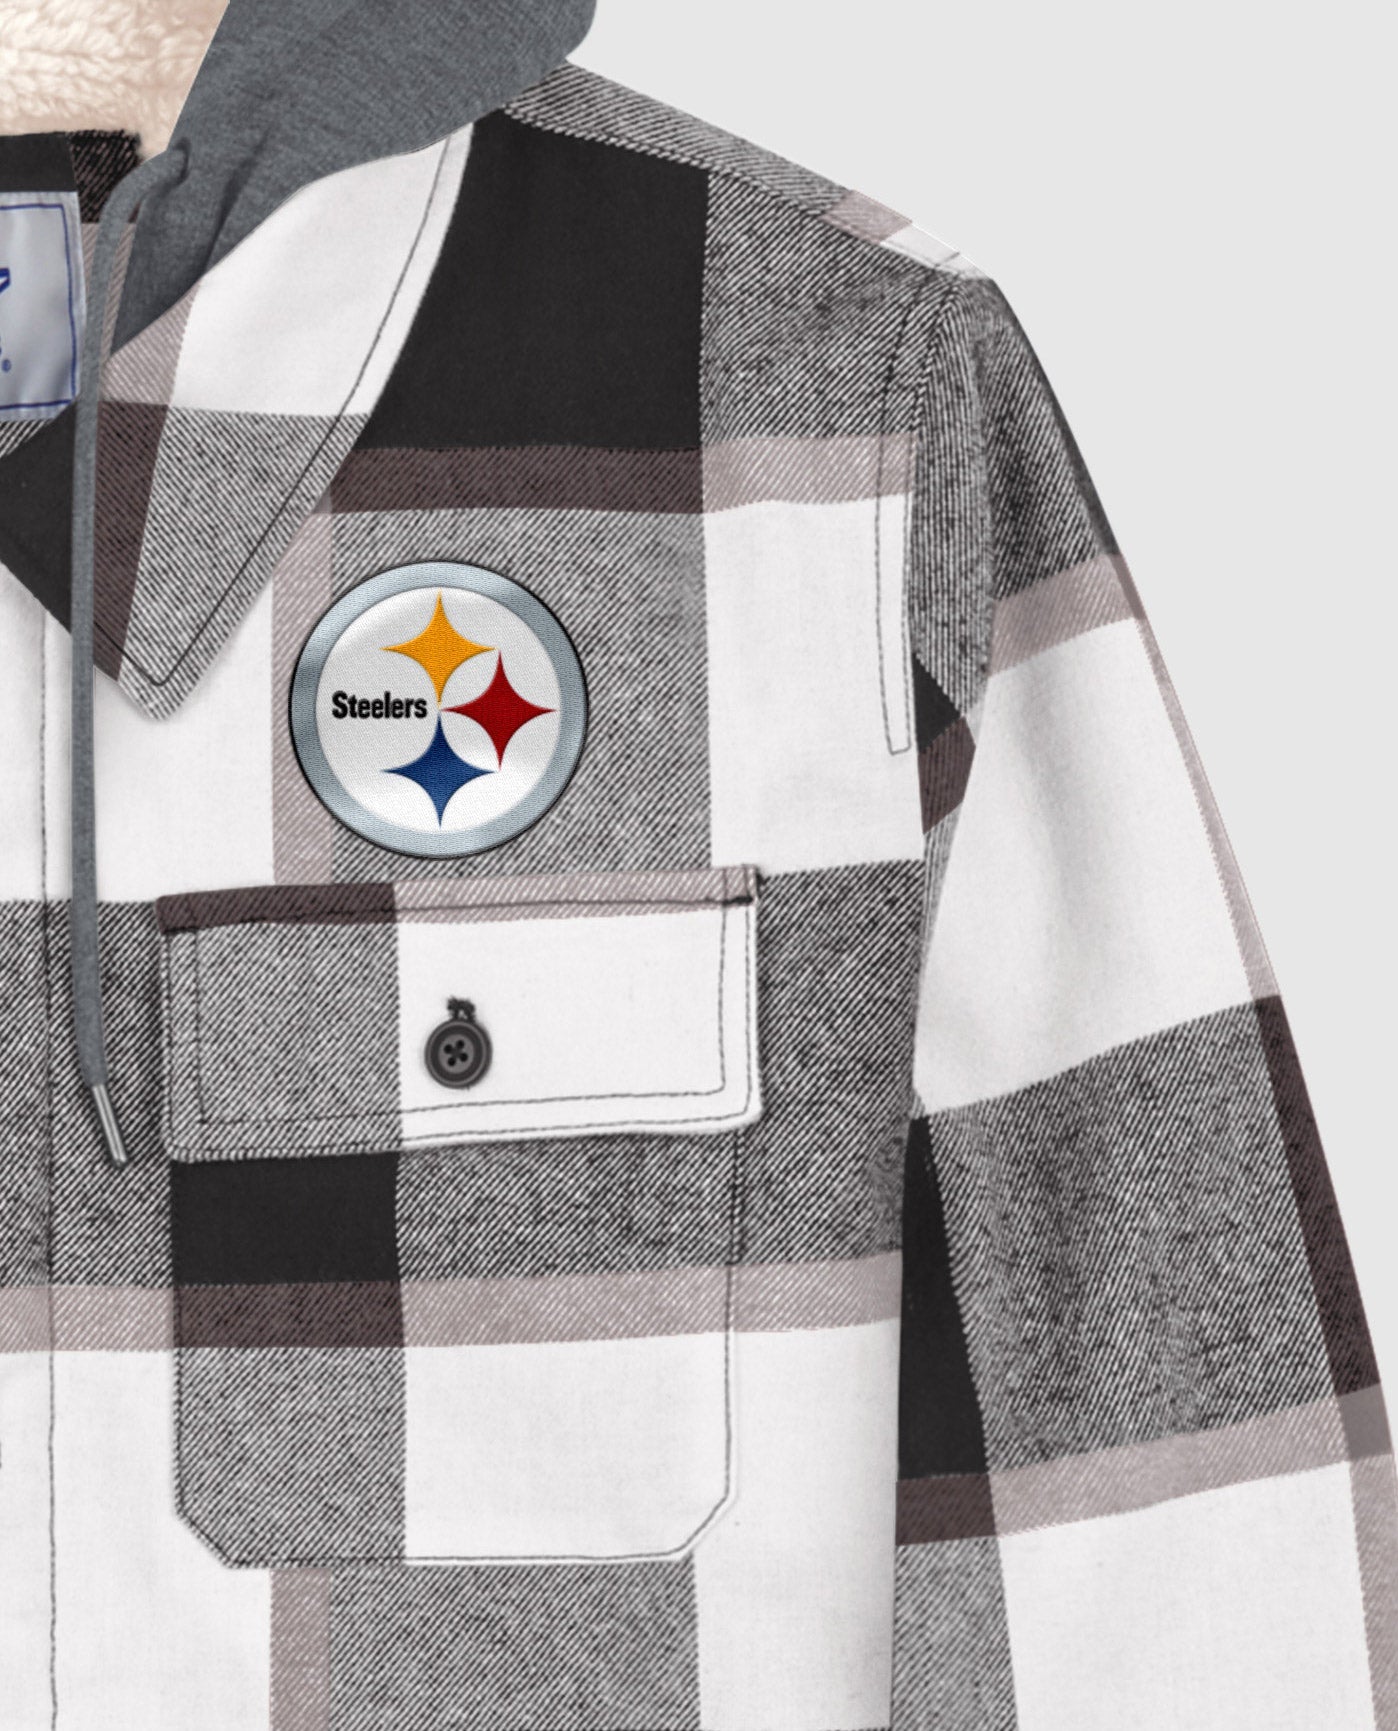 Pittsburgh Steelers Twill Applique Logo Above Left Pocket | Steelers Black